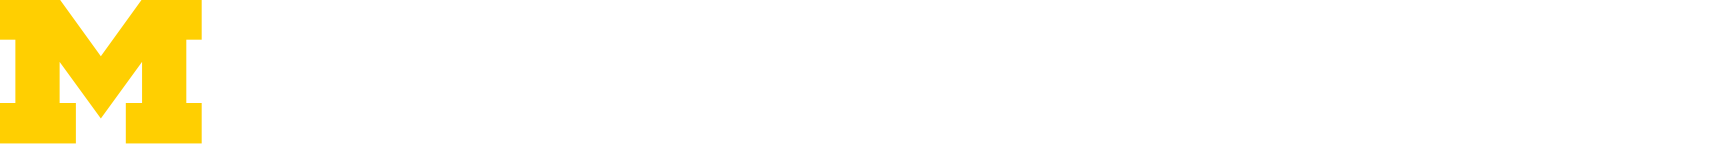 Transforming Engineering Education Lab Logo